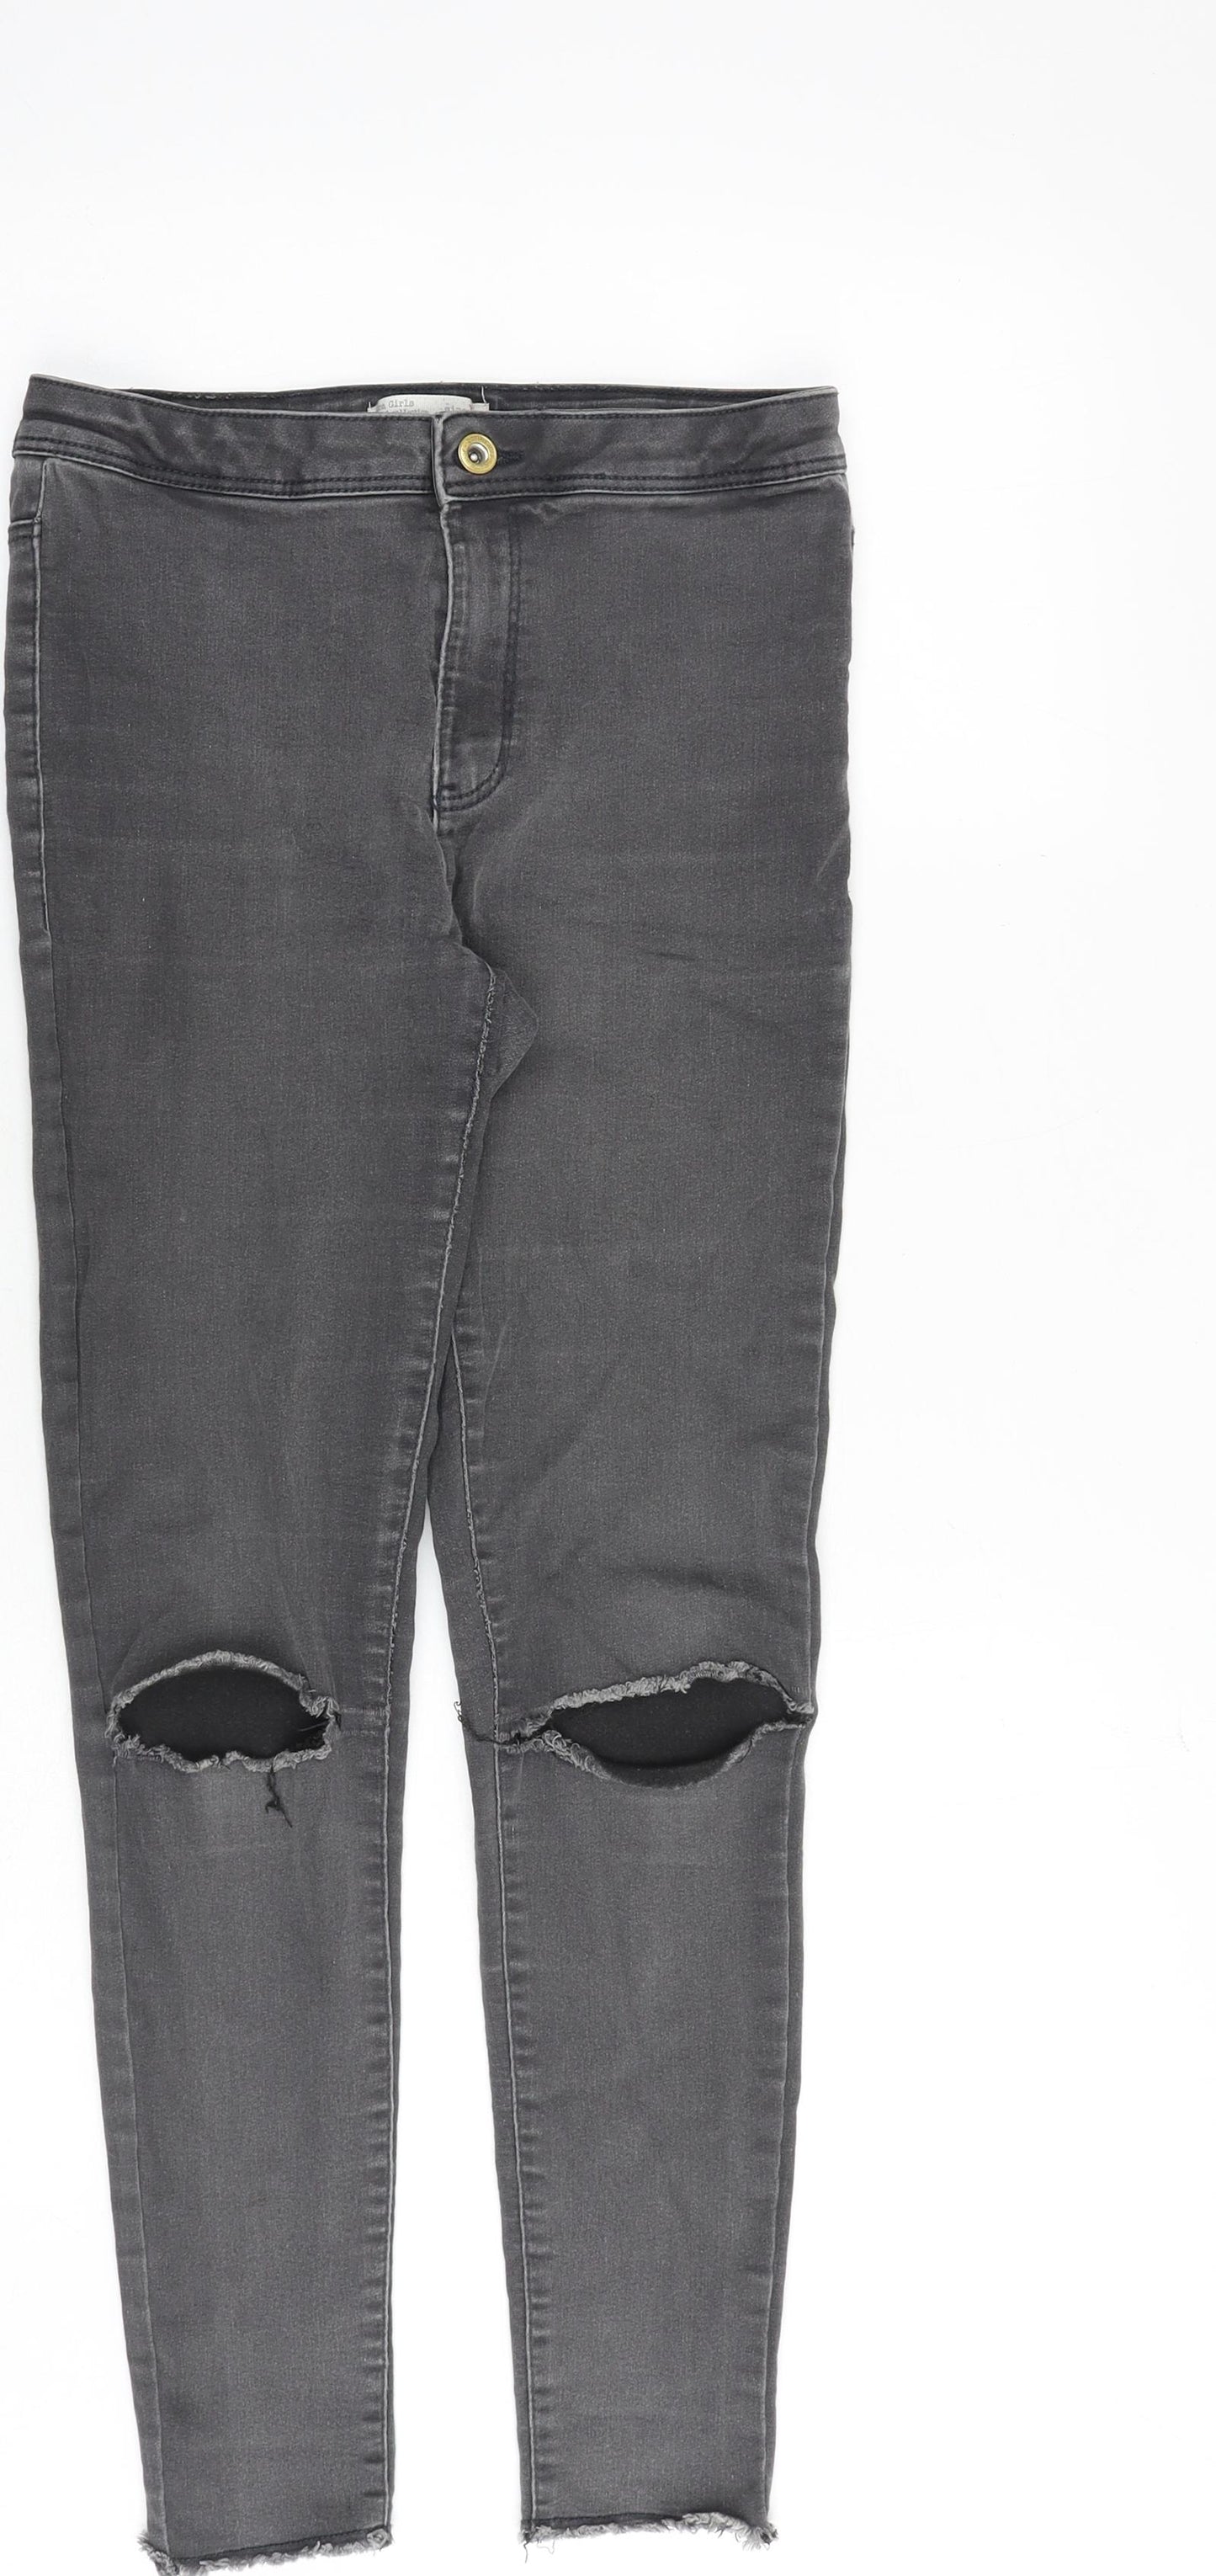 Zara Girls Grey Cotton Skinny Jeans Size 13-14 Years Regular Zip - Distressed